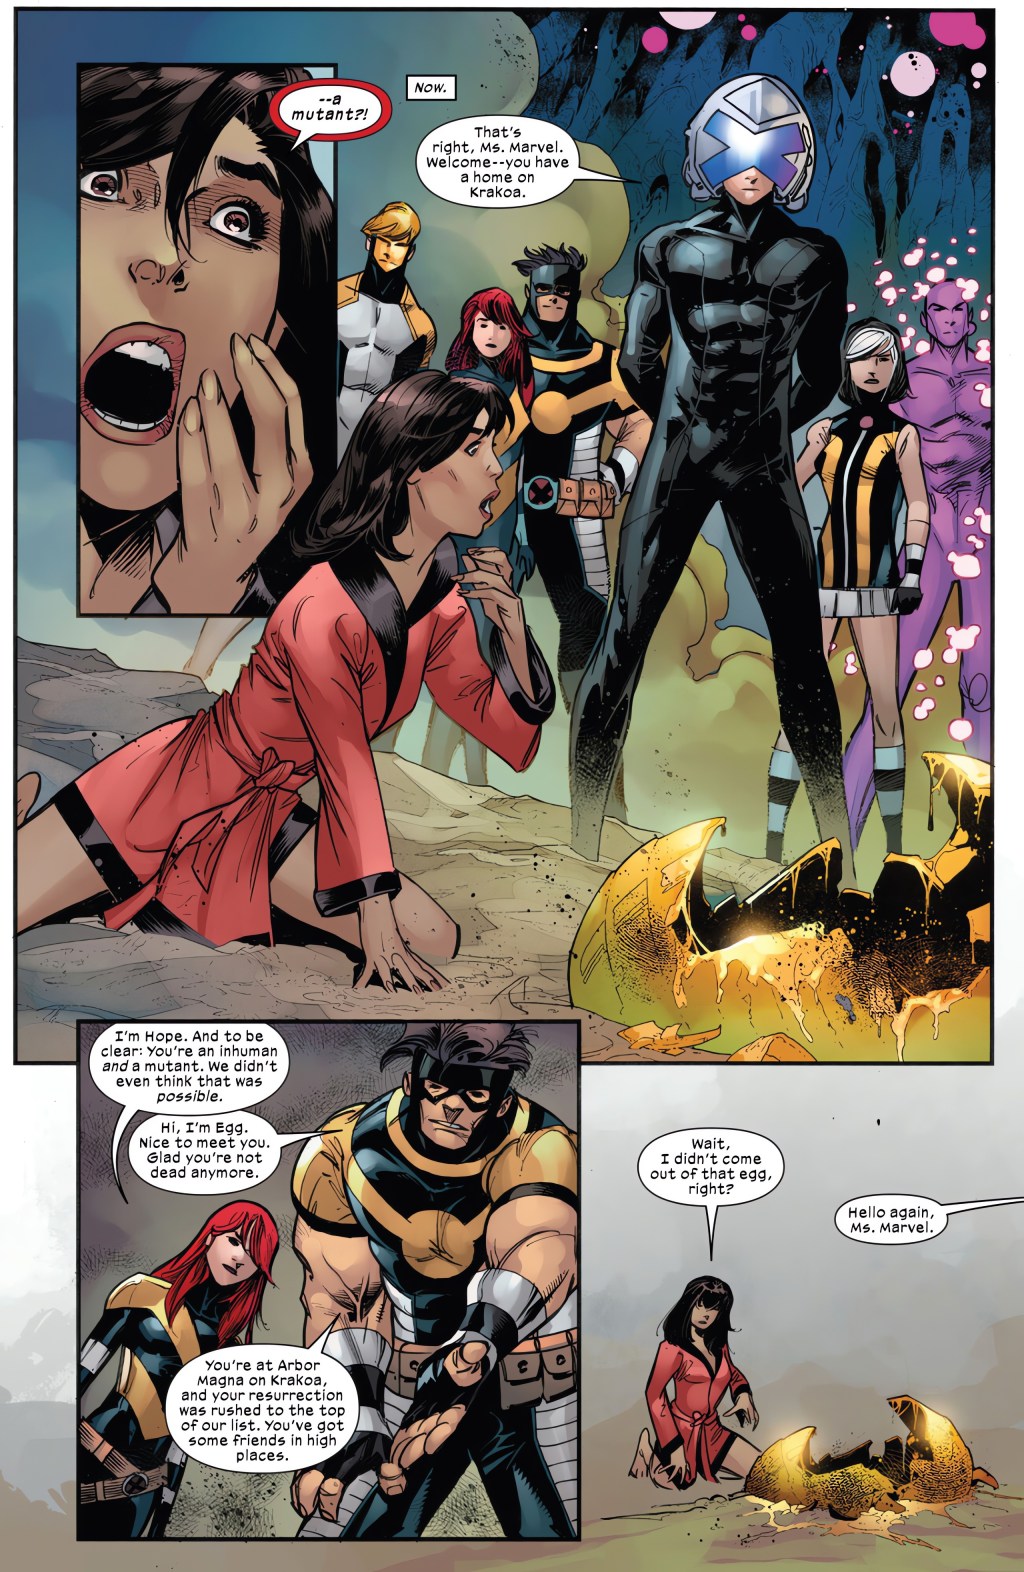 Ms. Marvel learns she is both a mutant and inhuman in X-men: Hellfire Gala 2023 Vol 1 #1 (2023), Marvel Comics. Words by Gerry Duggan and Art by Kris Anka, Joshua Cassara, Russell Dauterman, Adam Kubert, Pepe Larraz, R.B. Silva, and Luciano Vecchio.